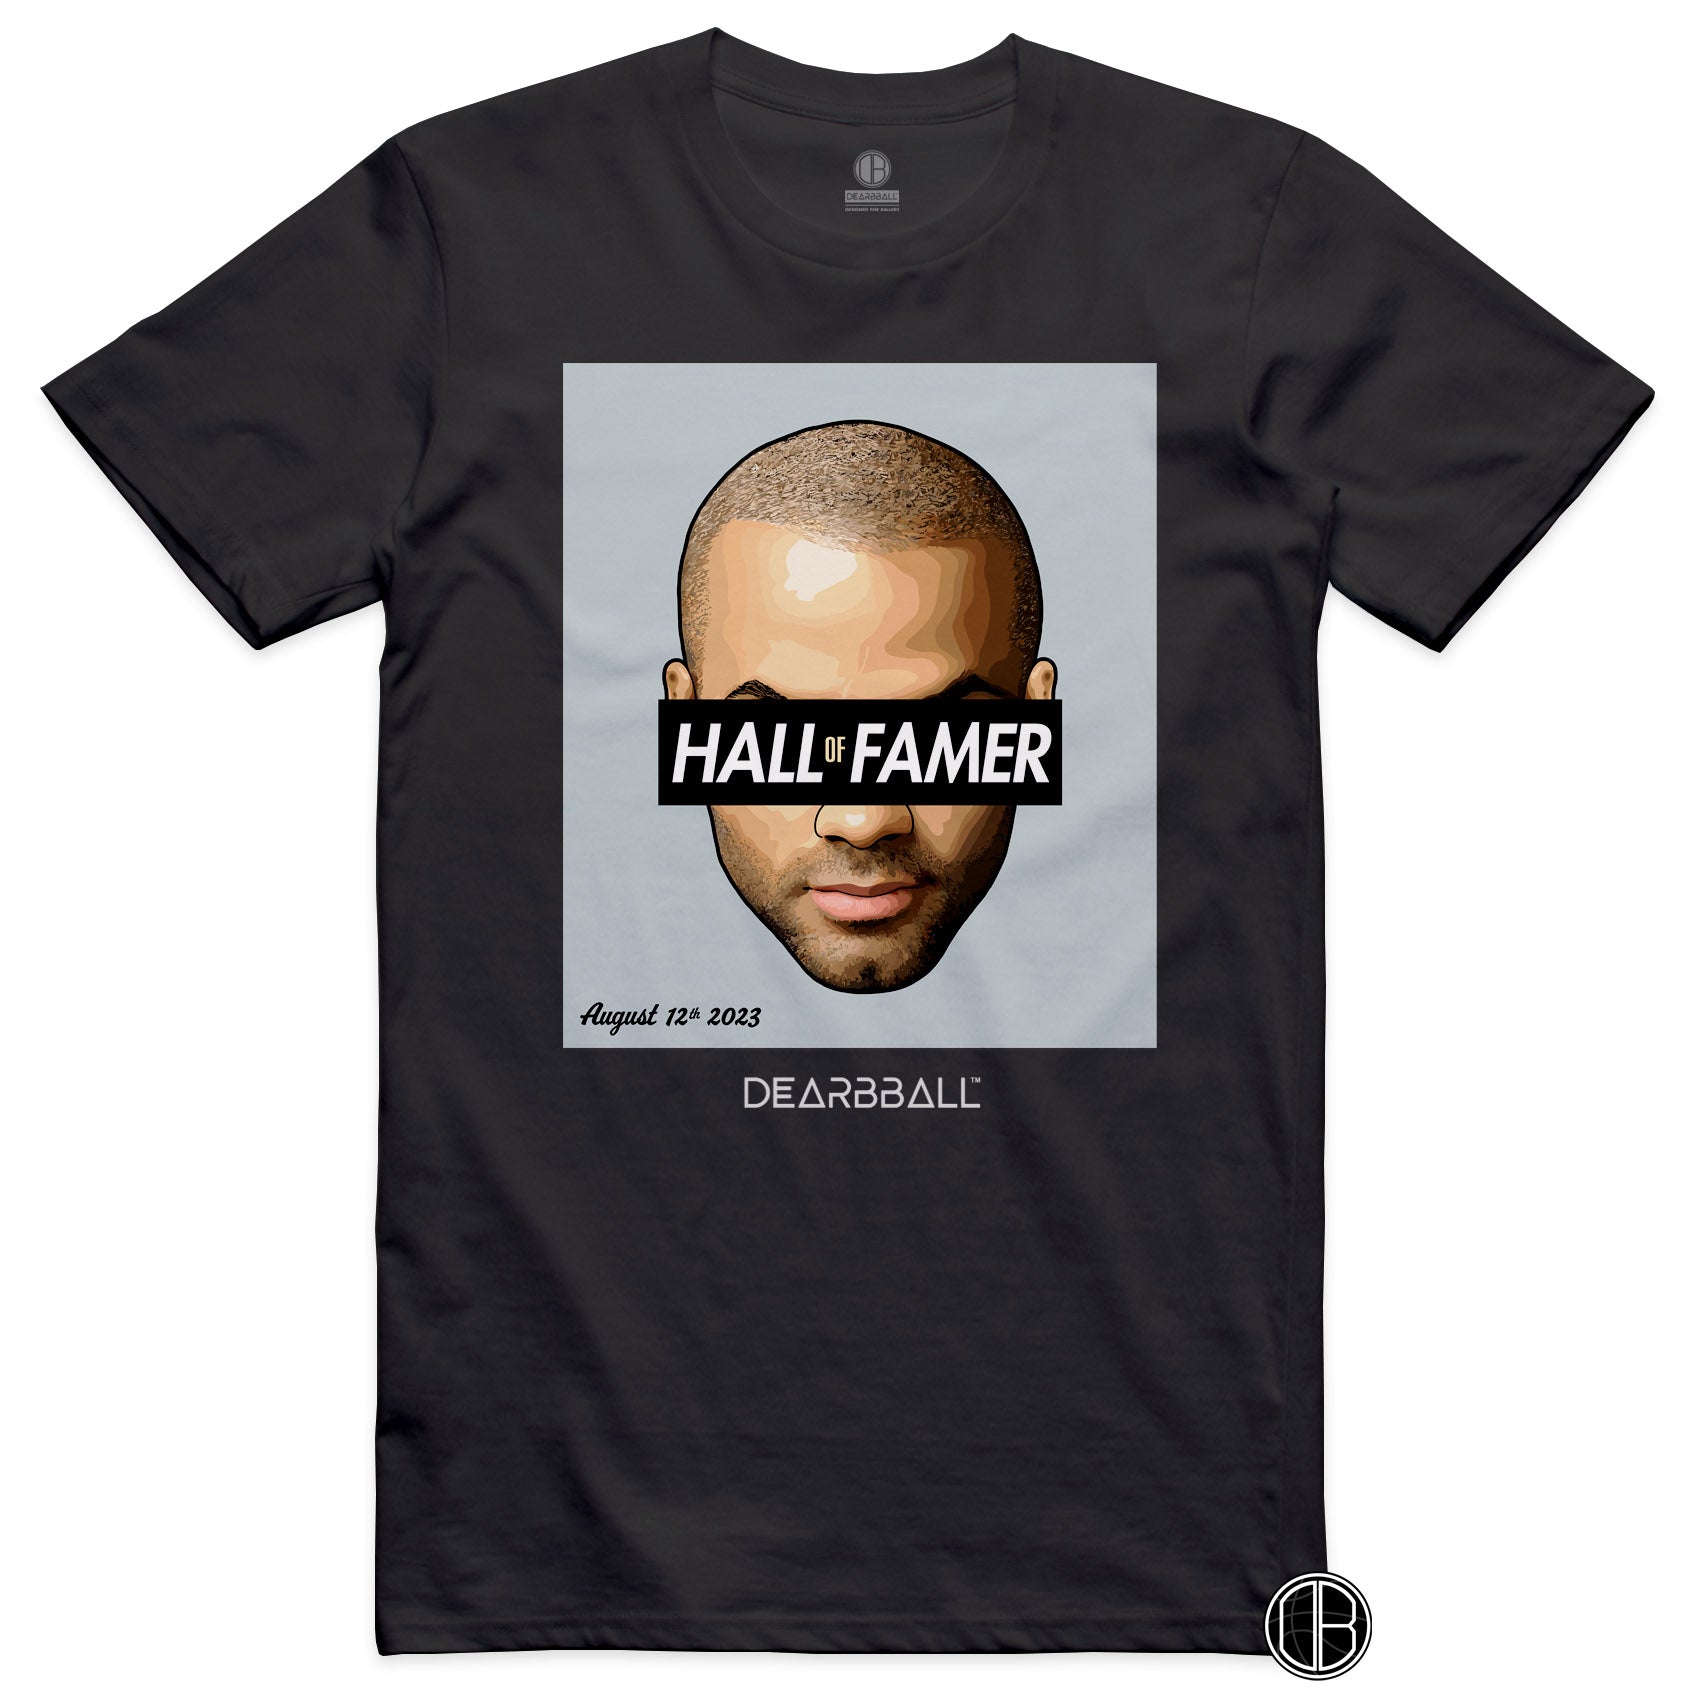 Camiseta DearBBall - HALL of FAMER 12 23 de agosto